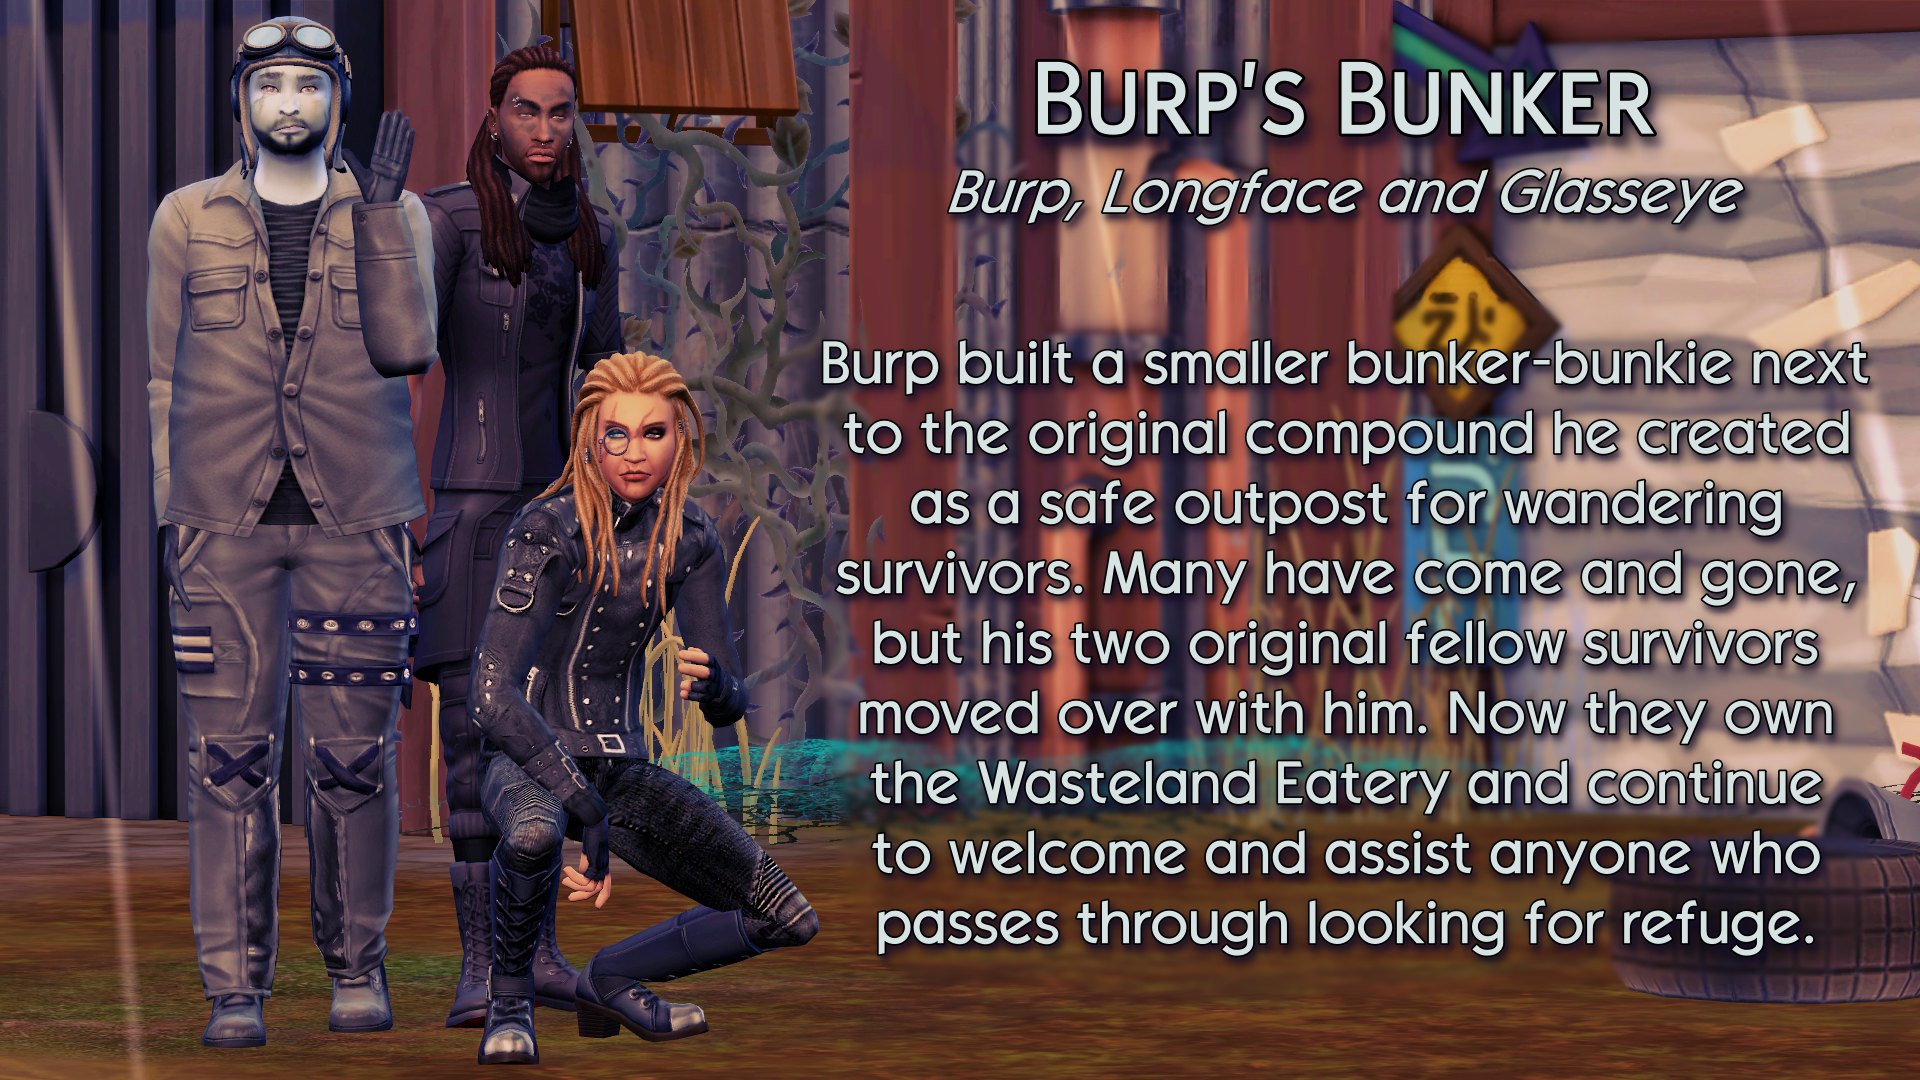 8 Burp's Bunkie-Bunker